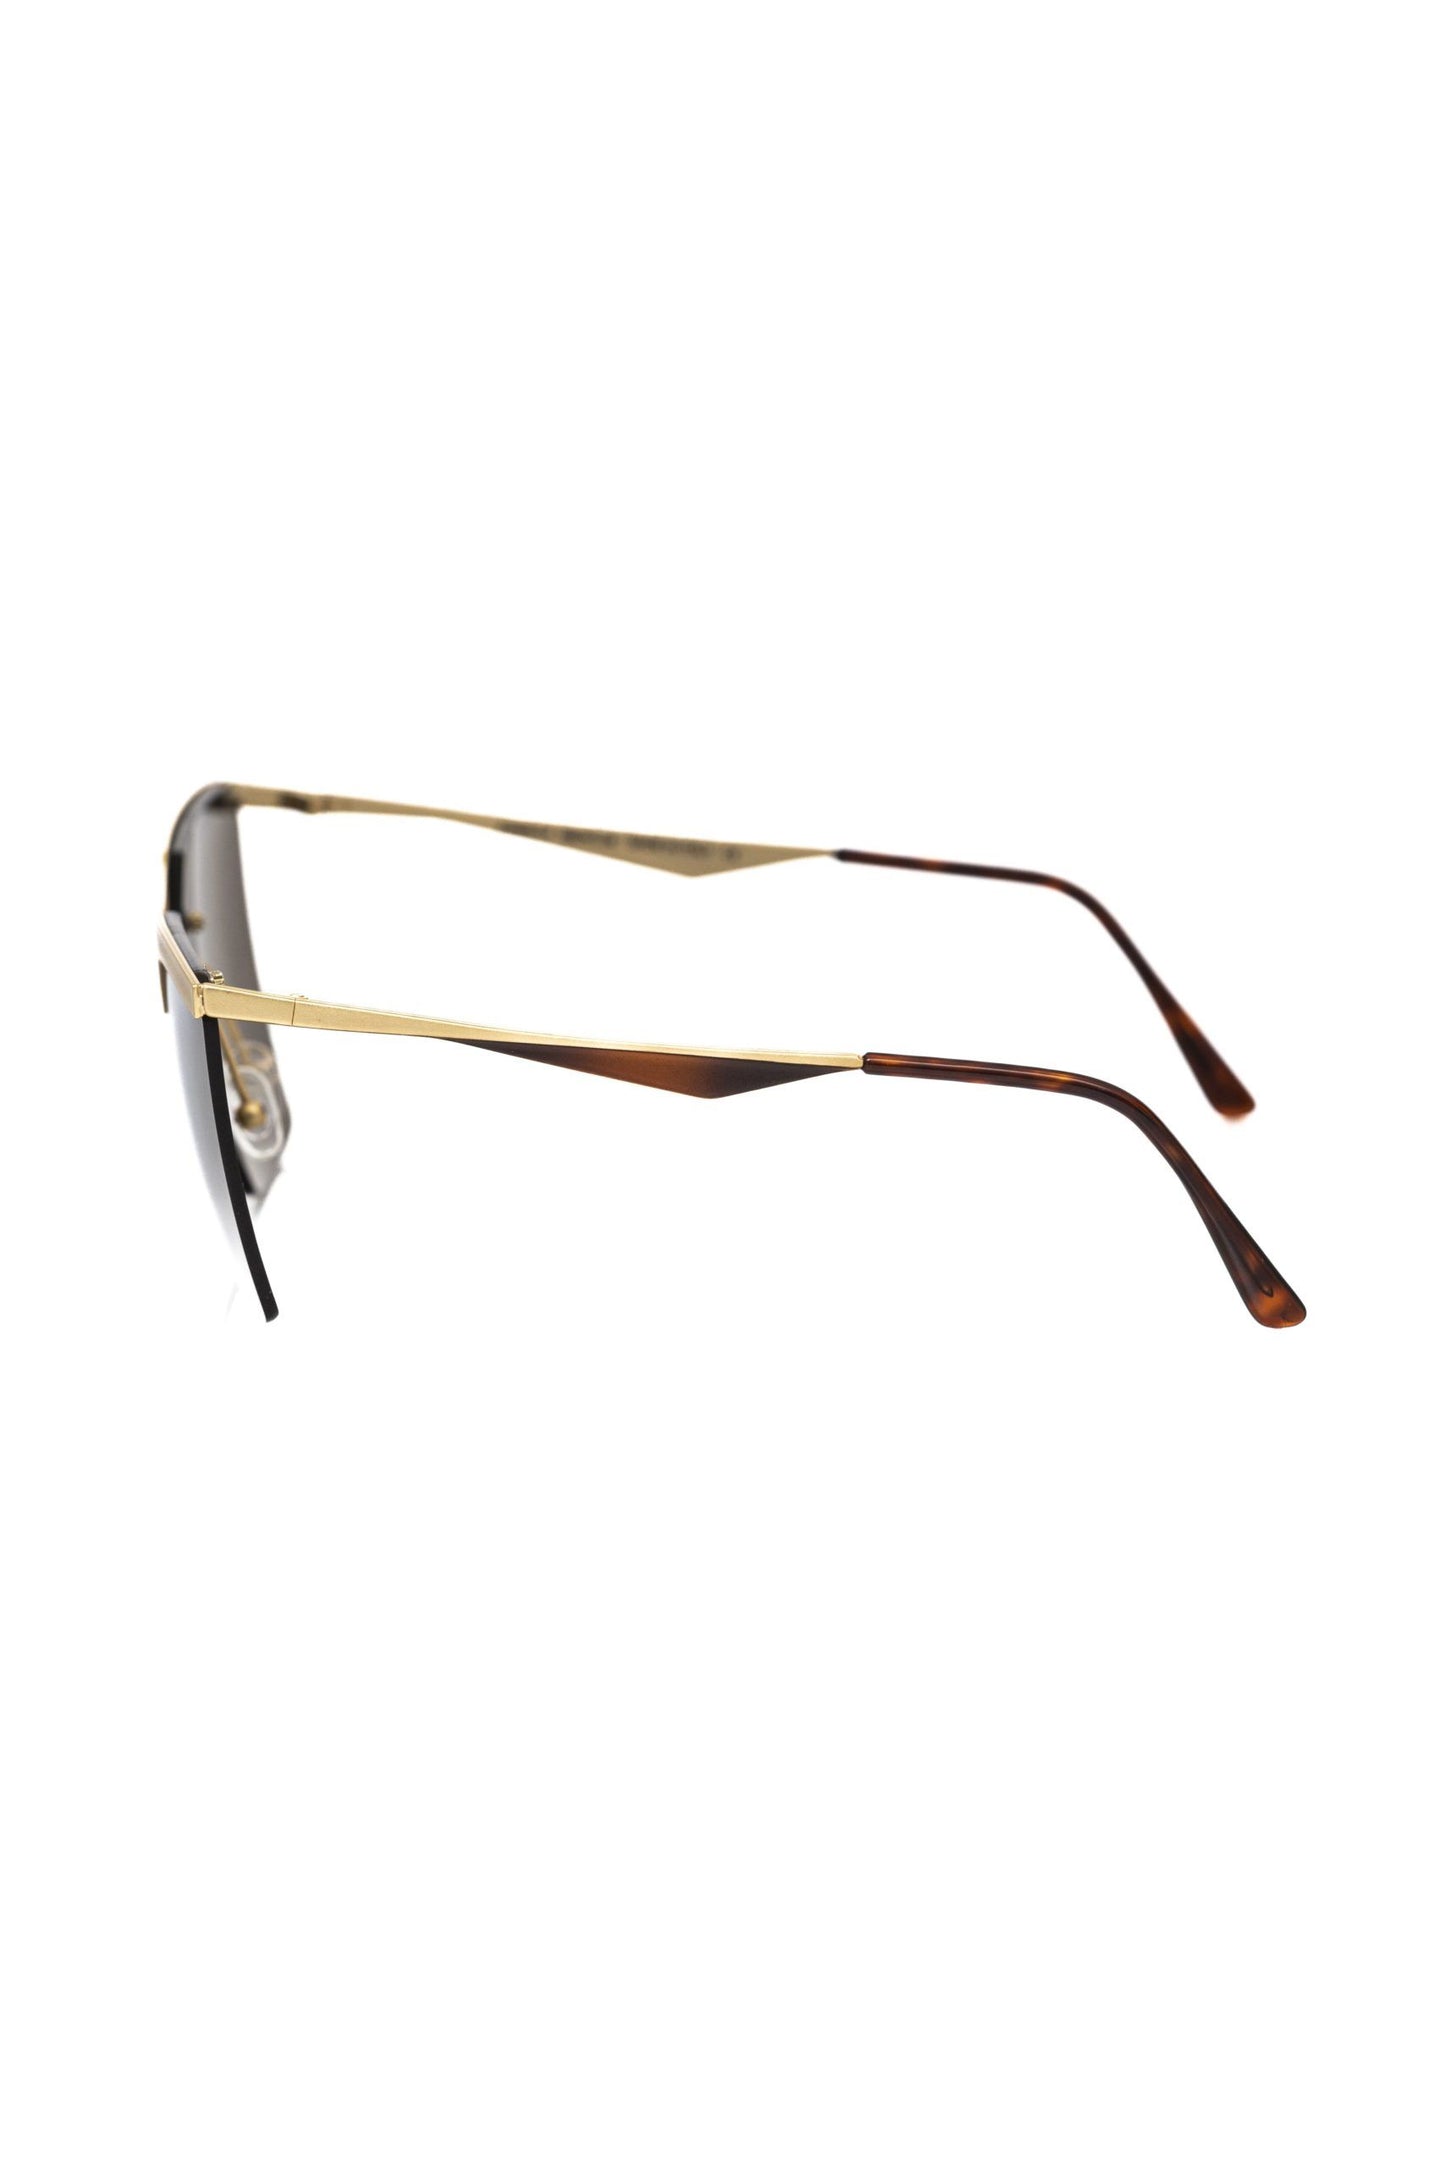 Frankie Morello FRMO-22088 Gold Metallic Fibre Sunglasses